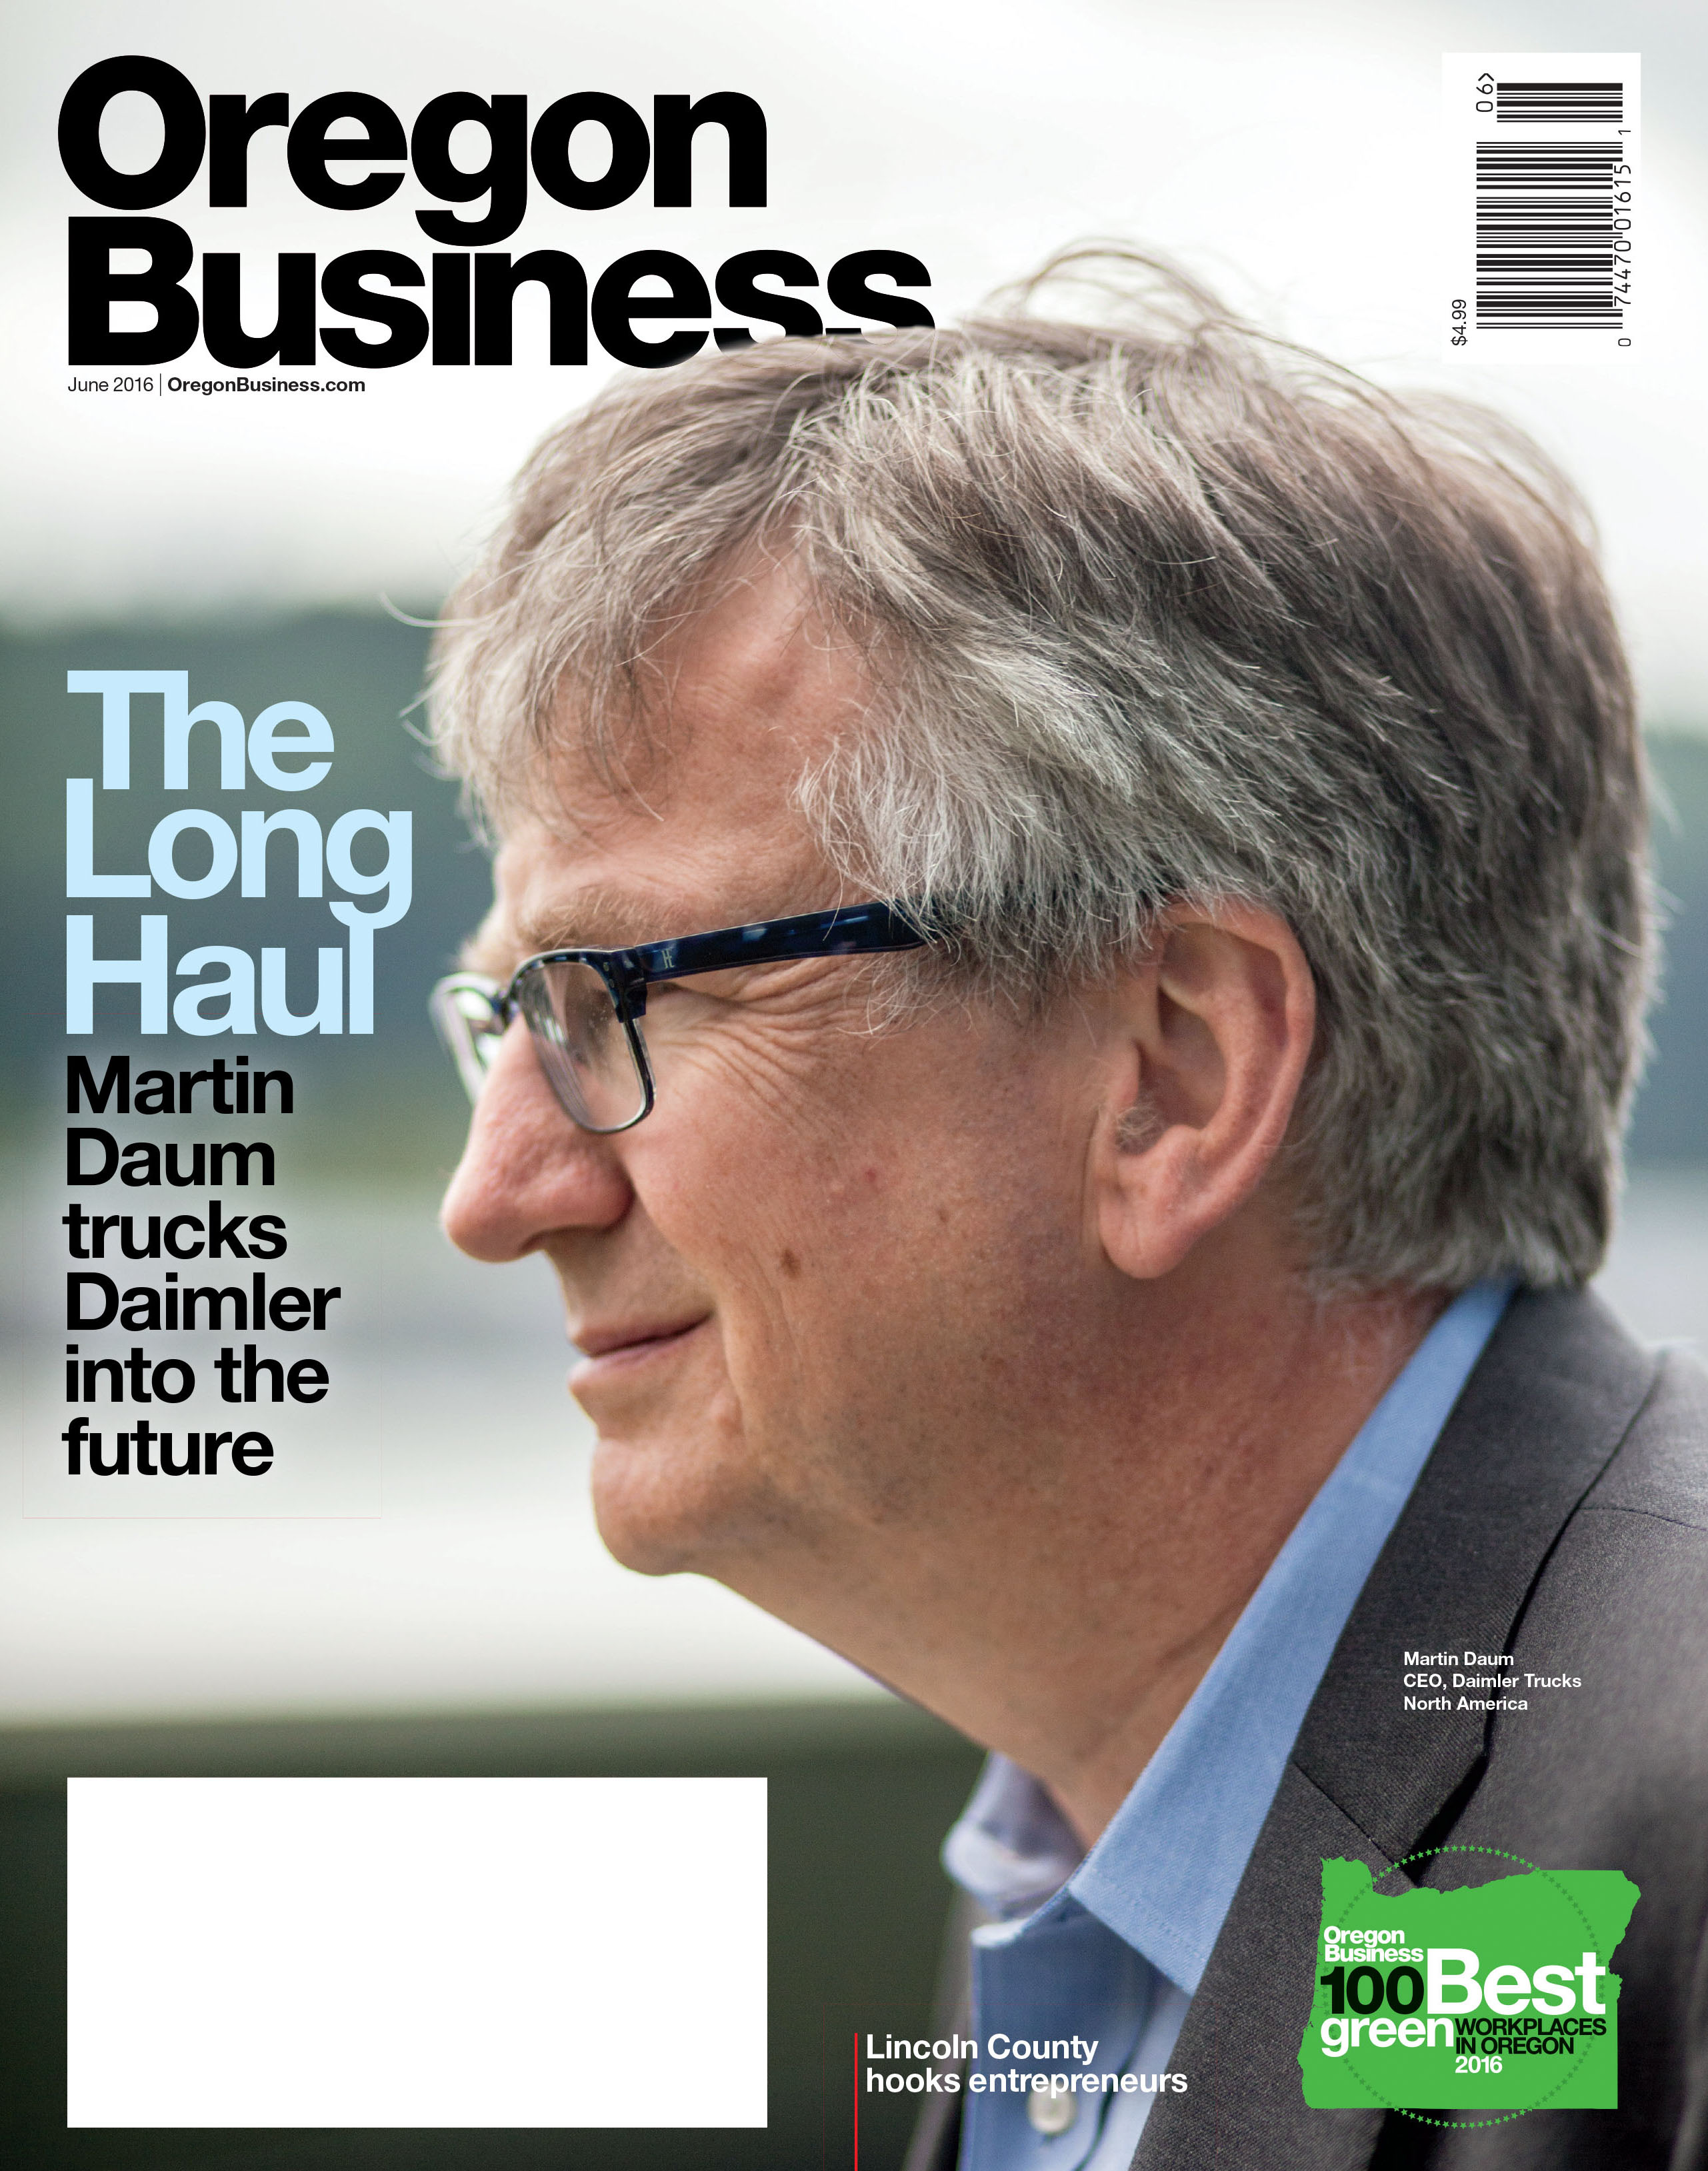 Oregon Business Cover June 2016 - Martin Daum portrait